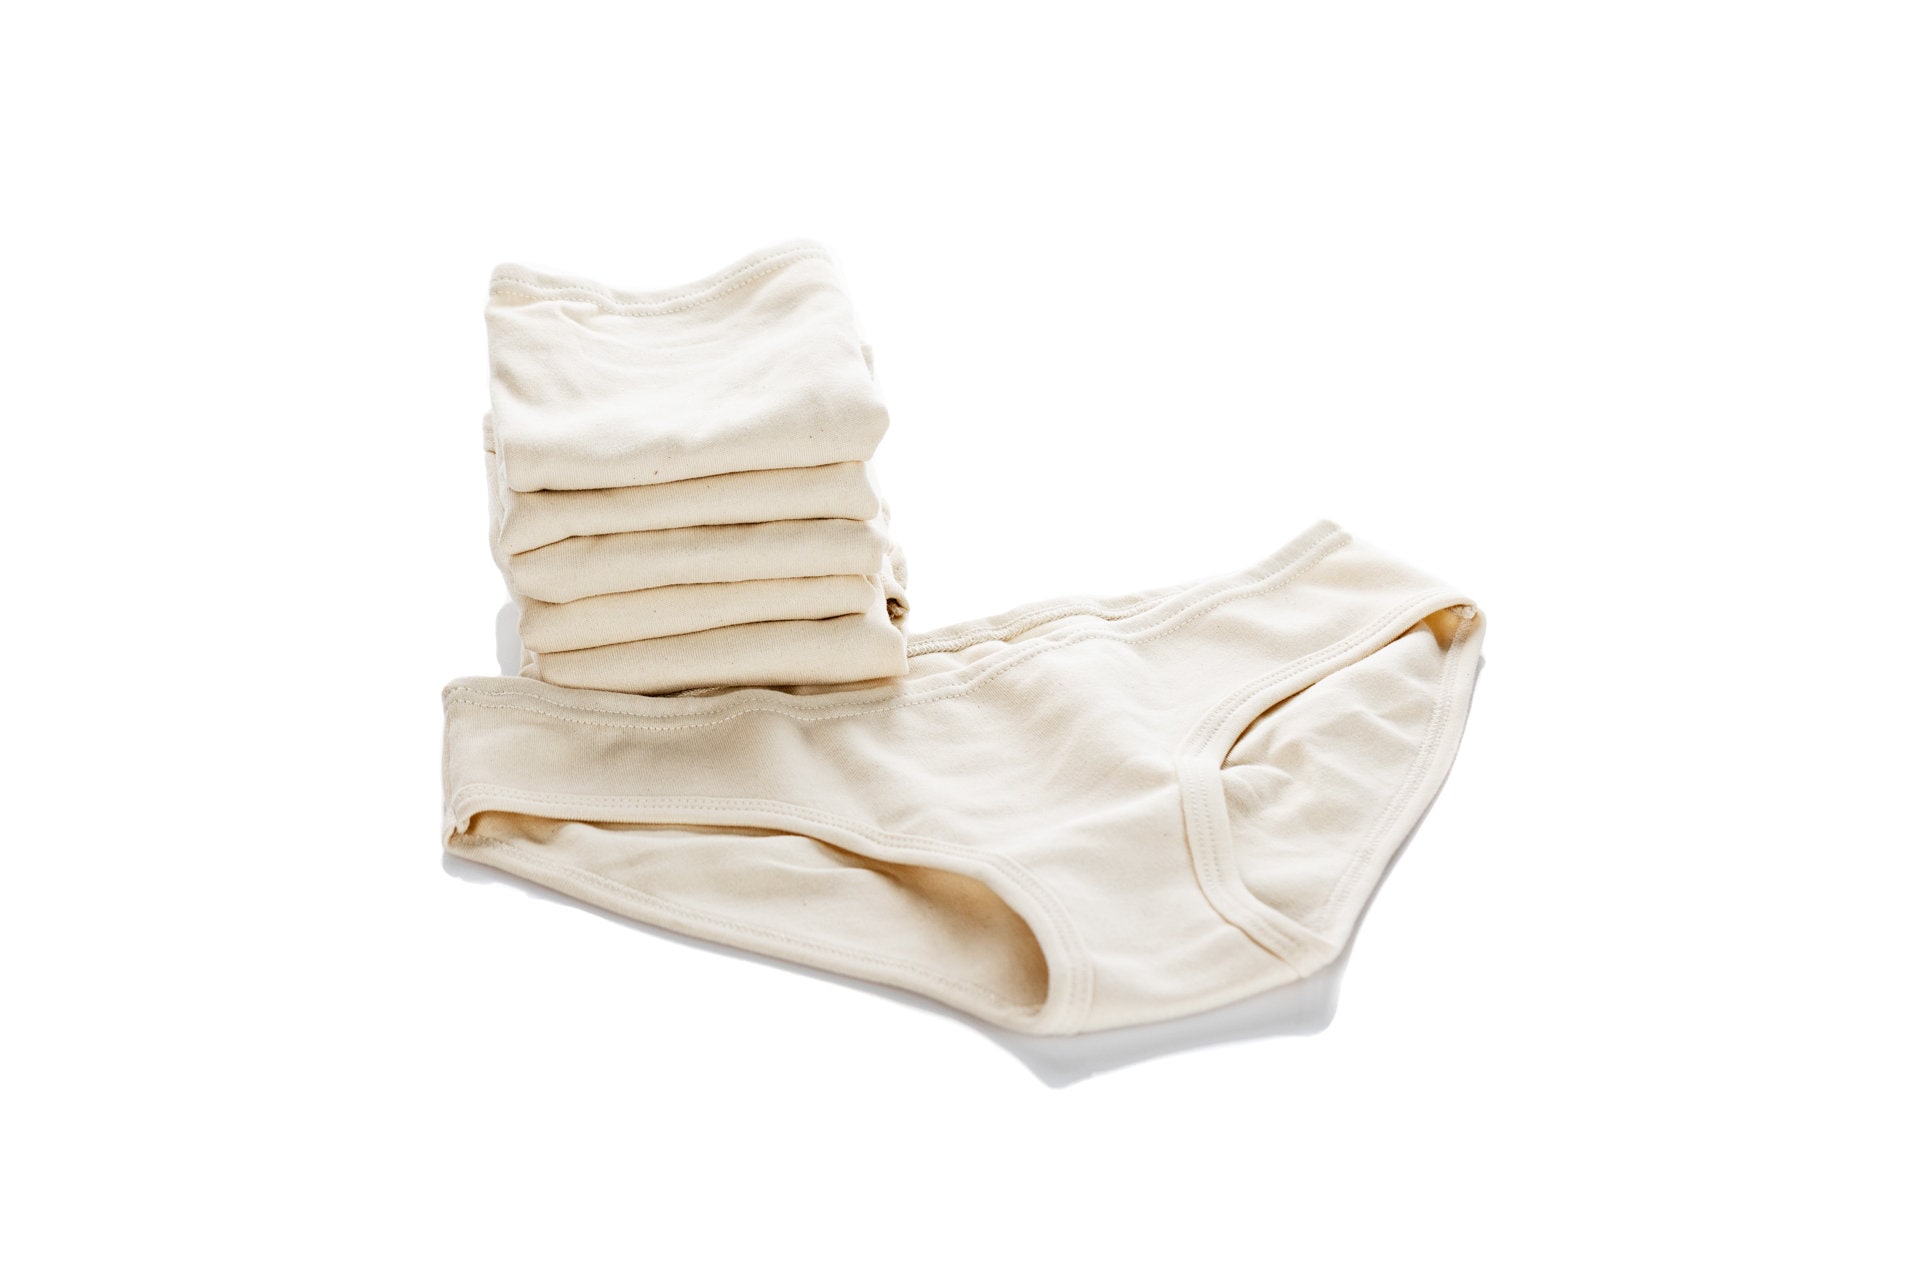 Cotton Panties - Buy Pure Cotton Underwear for Ladies Online